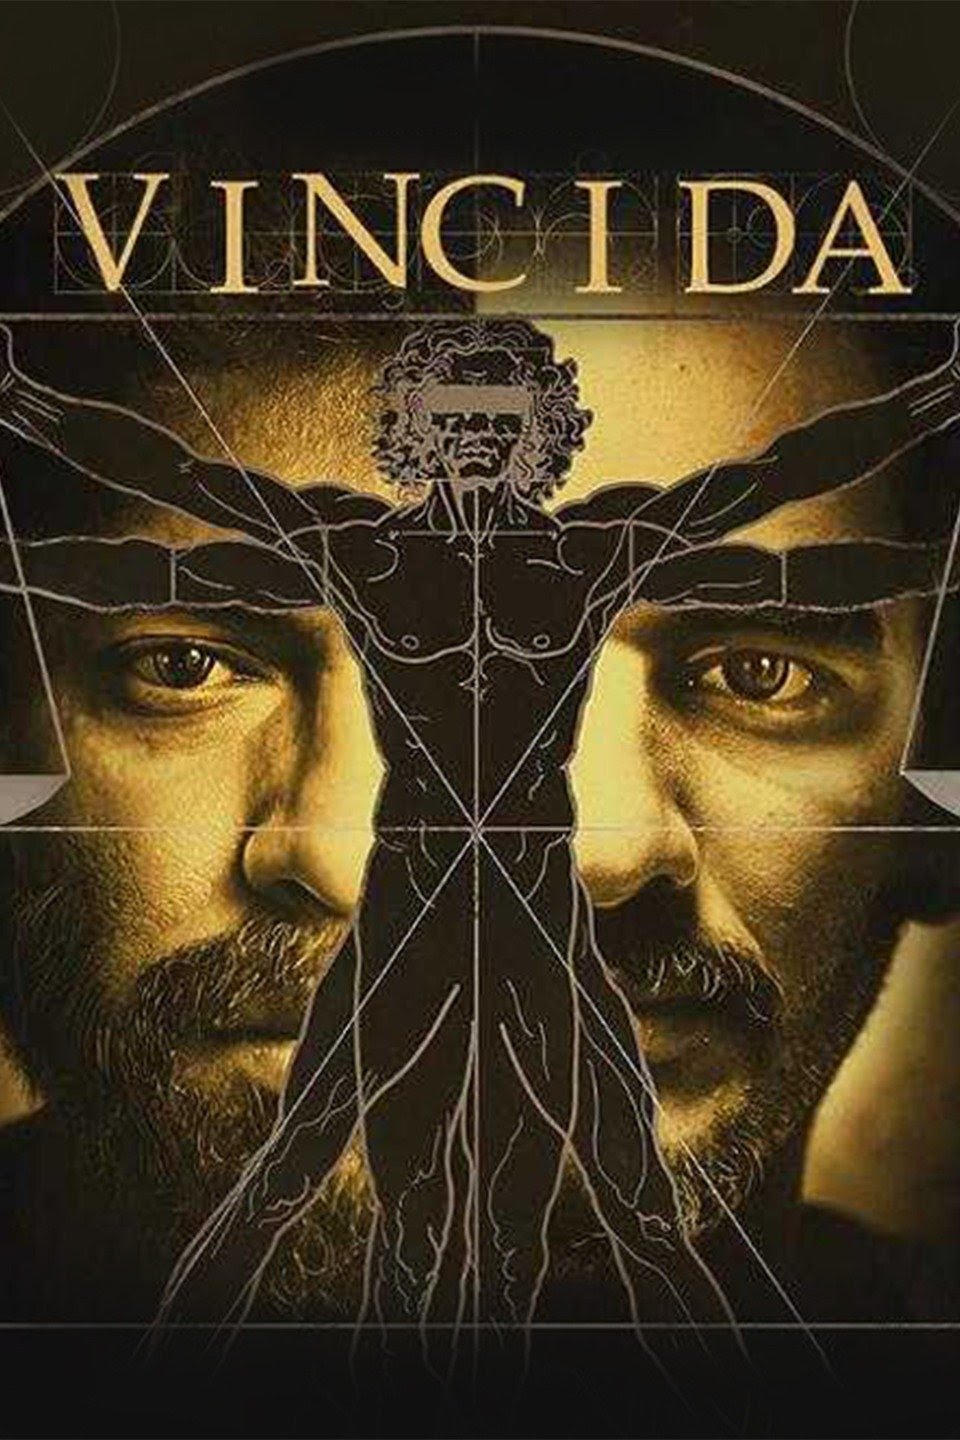 Download Vinci Da 2019 Movie Bengali WebRip 480p | 720p